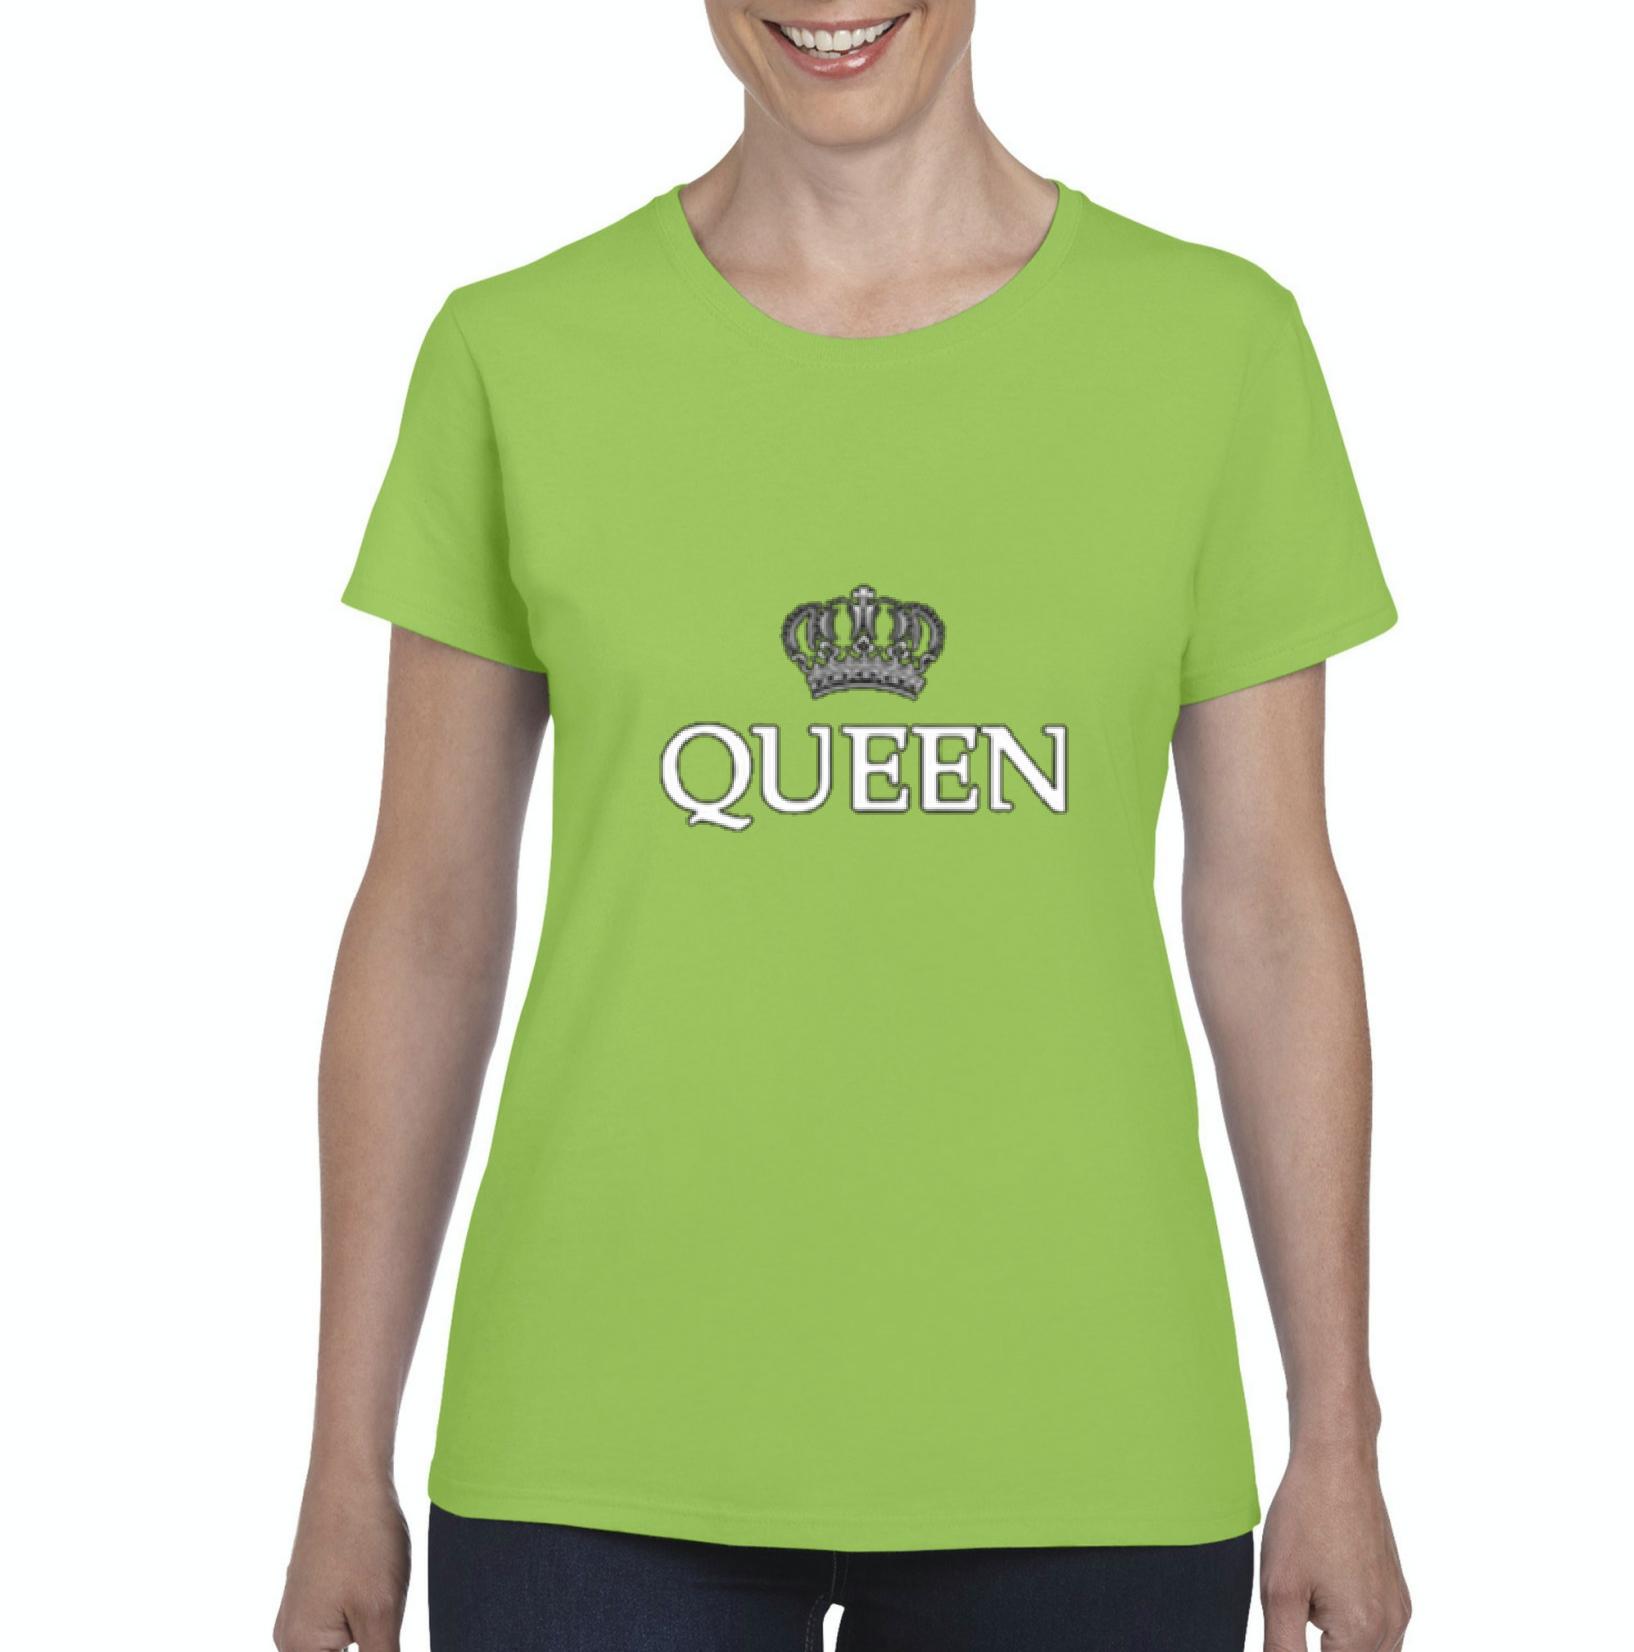 IWPF - Women's T-Shirt Short Sleeve - Queen Crown - image 1 of 5